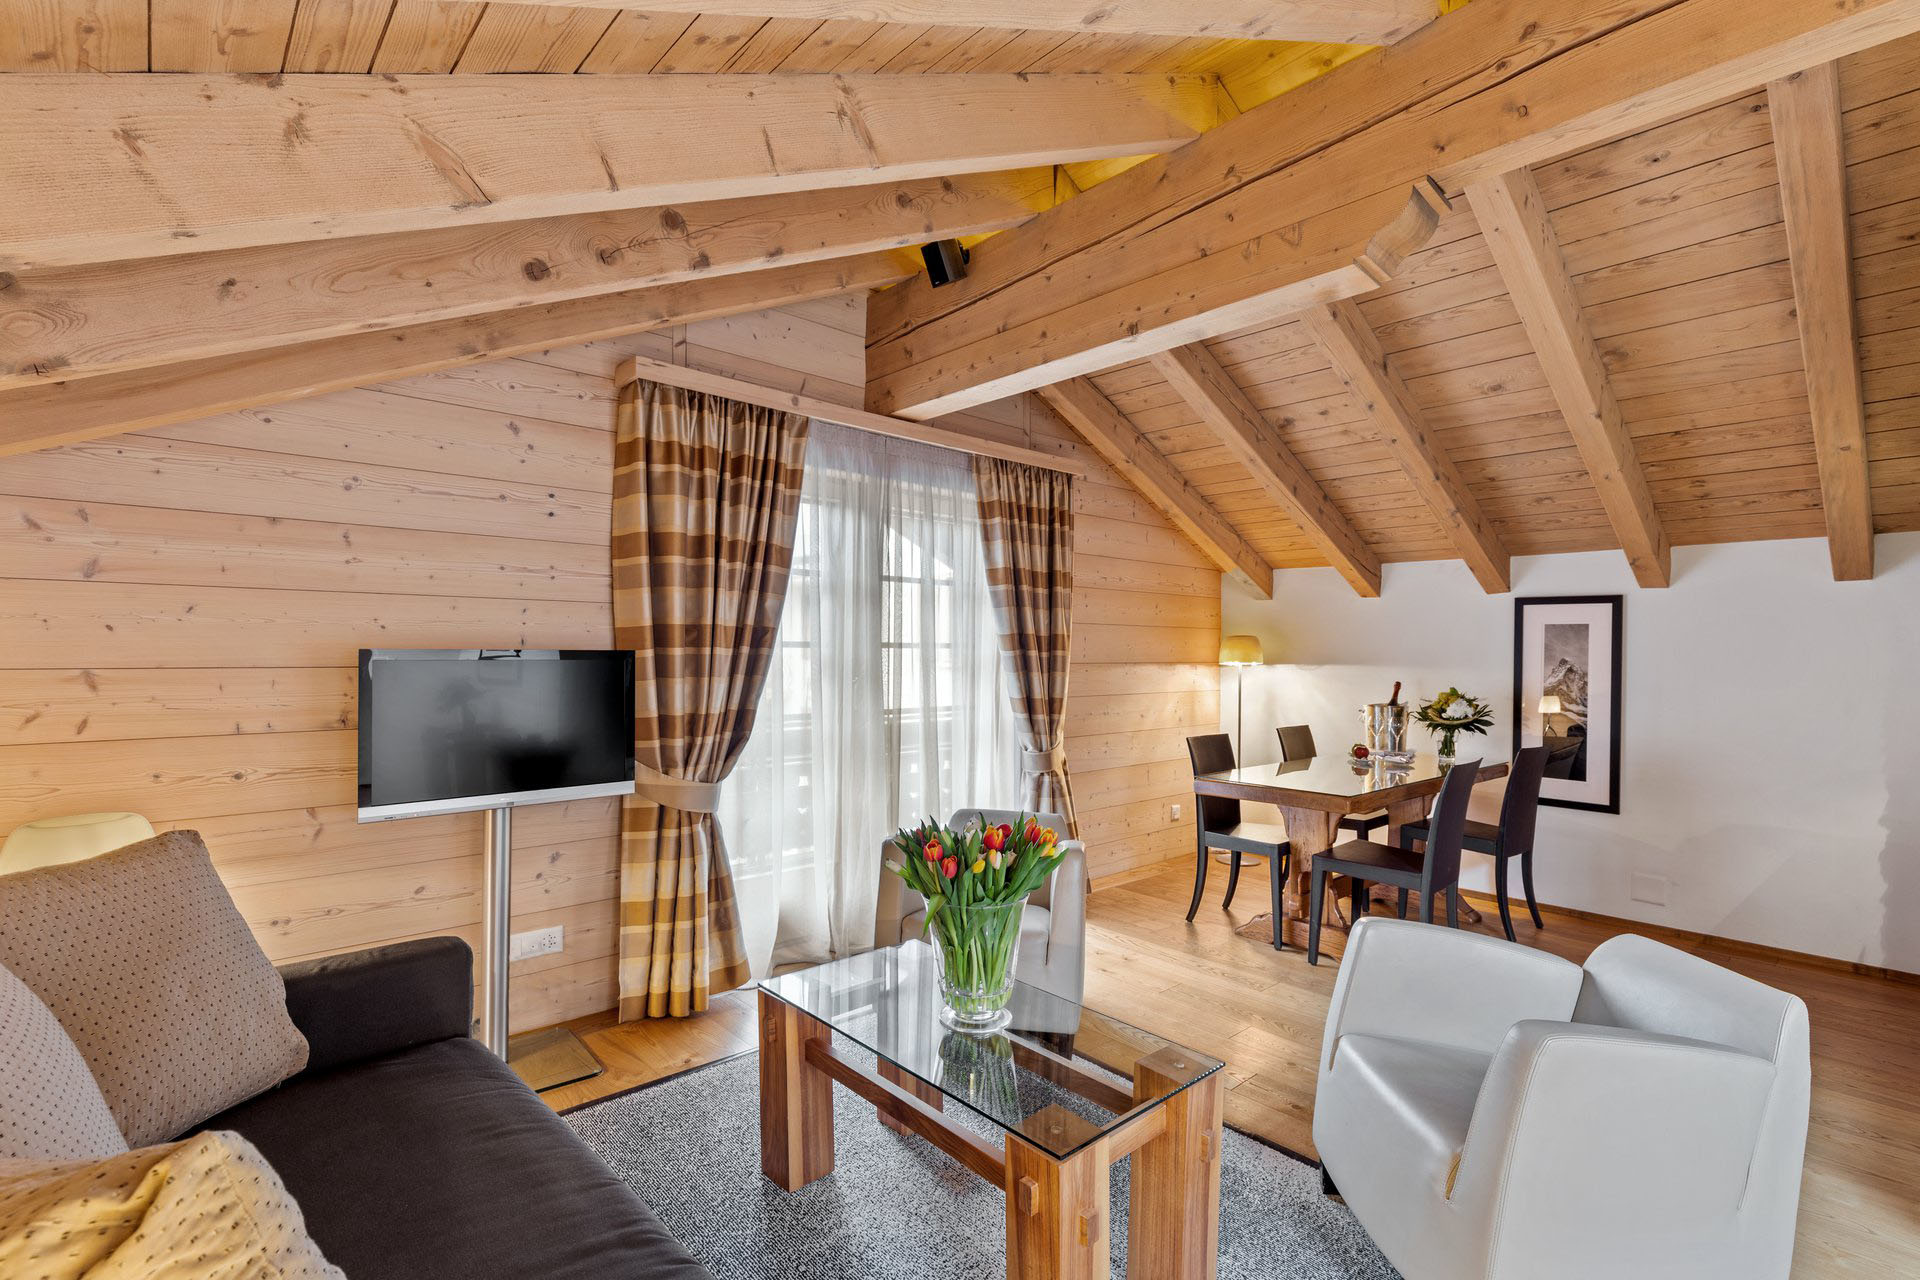 Chalet Suite Dining Room - Grand Hotel Zermatterhof